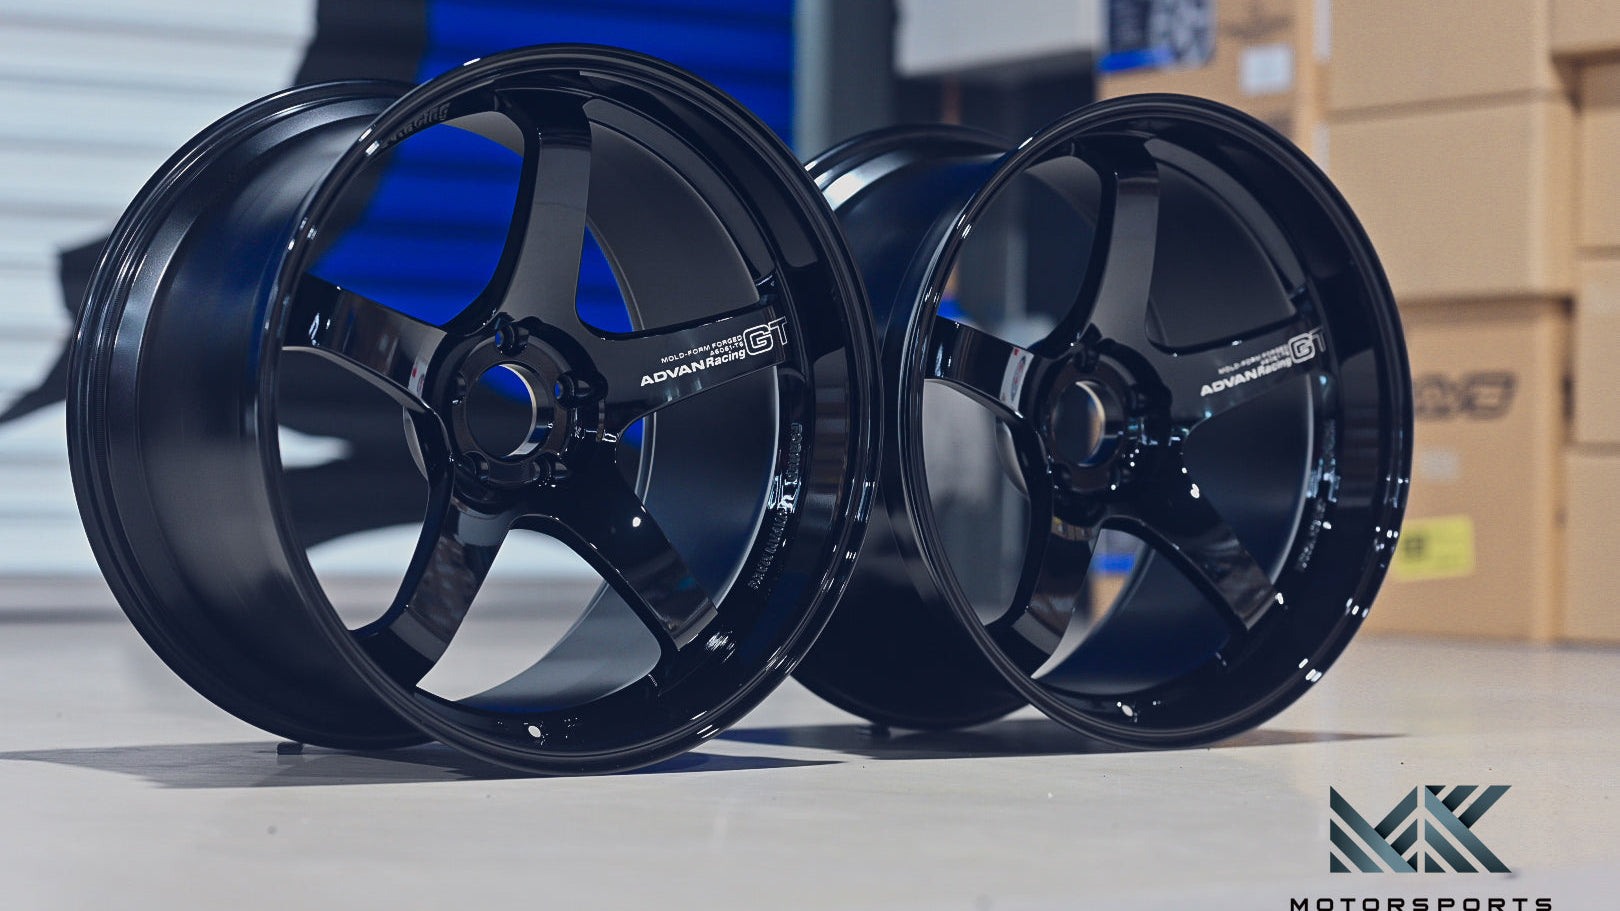 Advan GT Premium - Premium Wheels from Advan Racing - From just $4590.00! Shop now at MK MOTORSPORTS